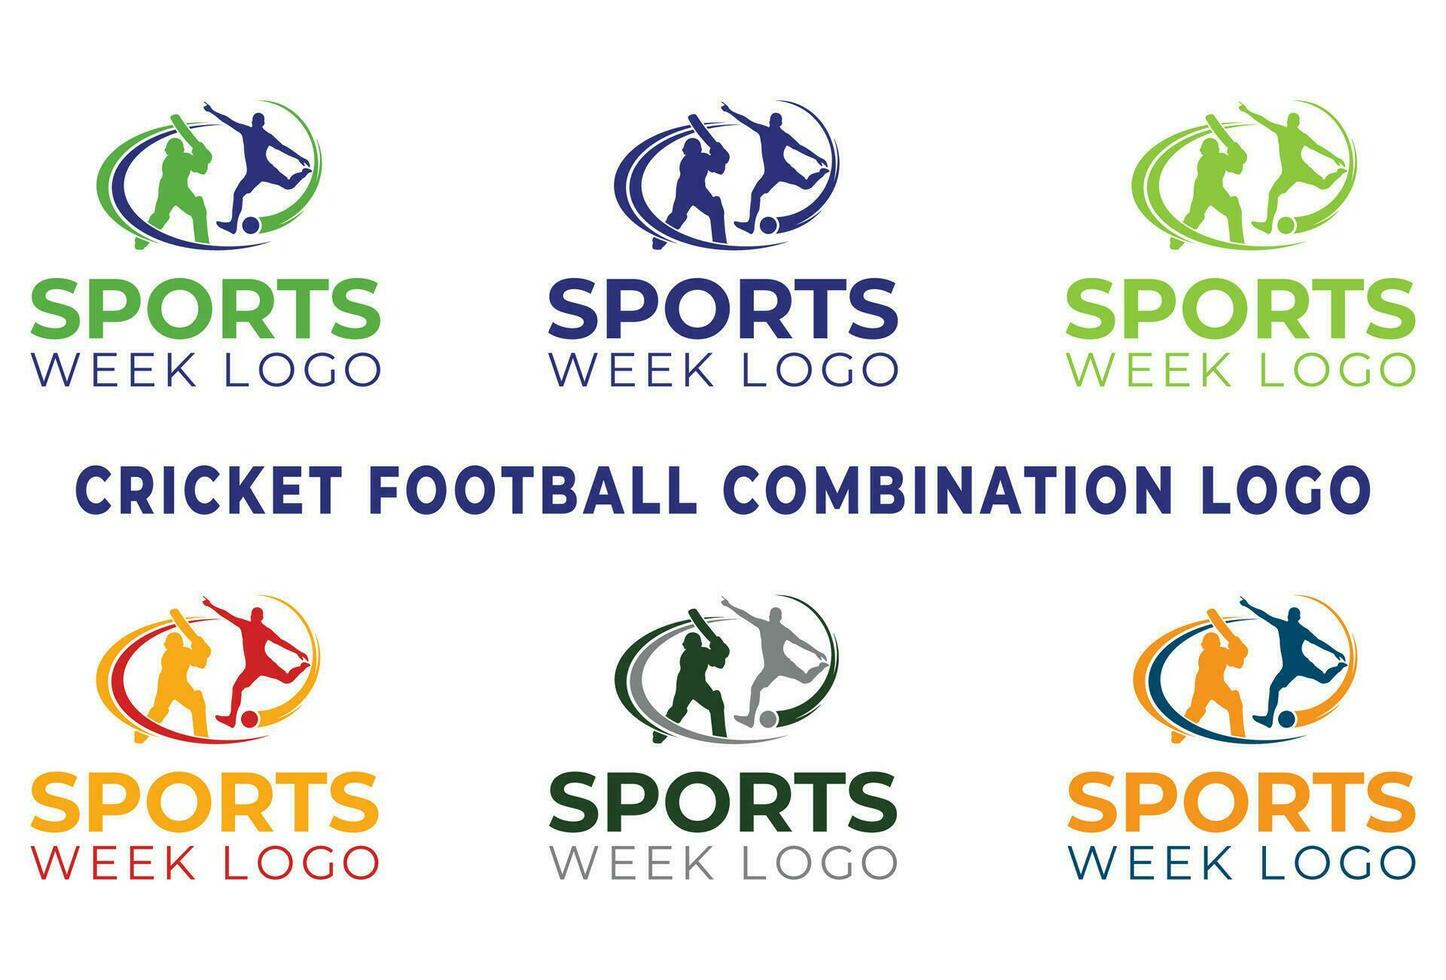 Esportes semana logotipo, futebol Grilo logotipo, futebol e Grilo combinação torneio logotipo vetor modelo.